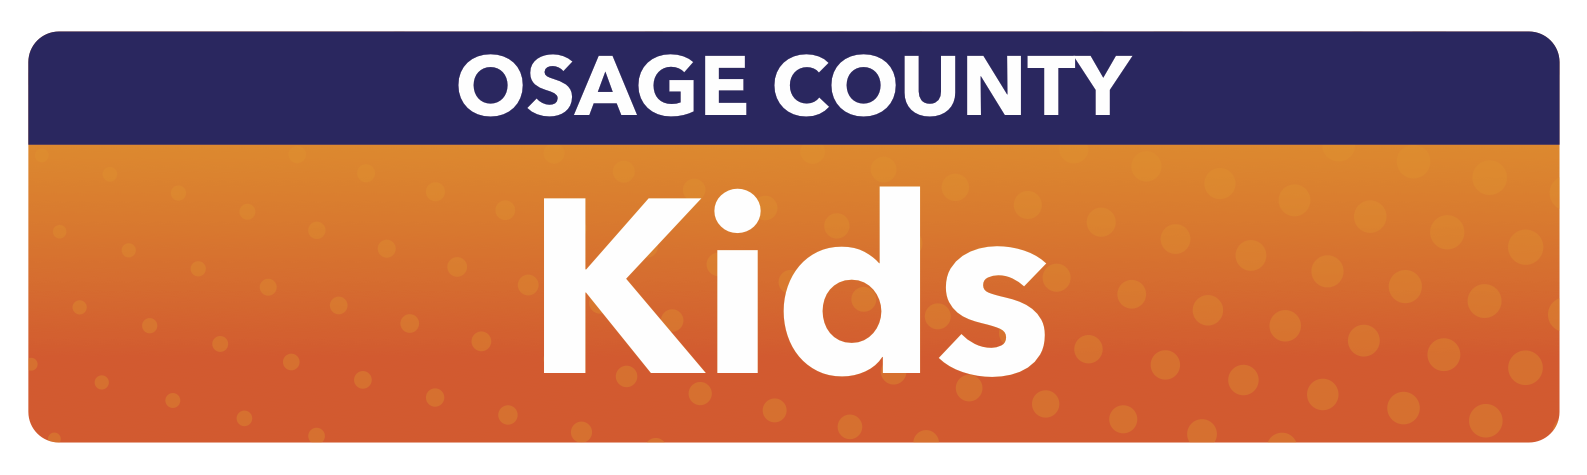 Osage County Kids Bookbox